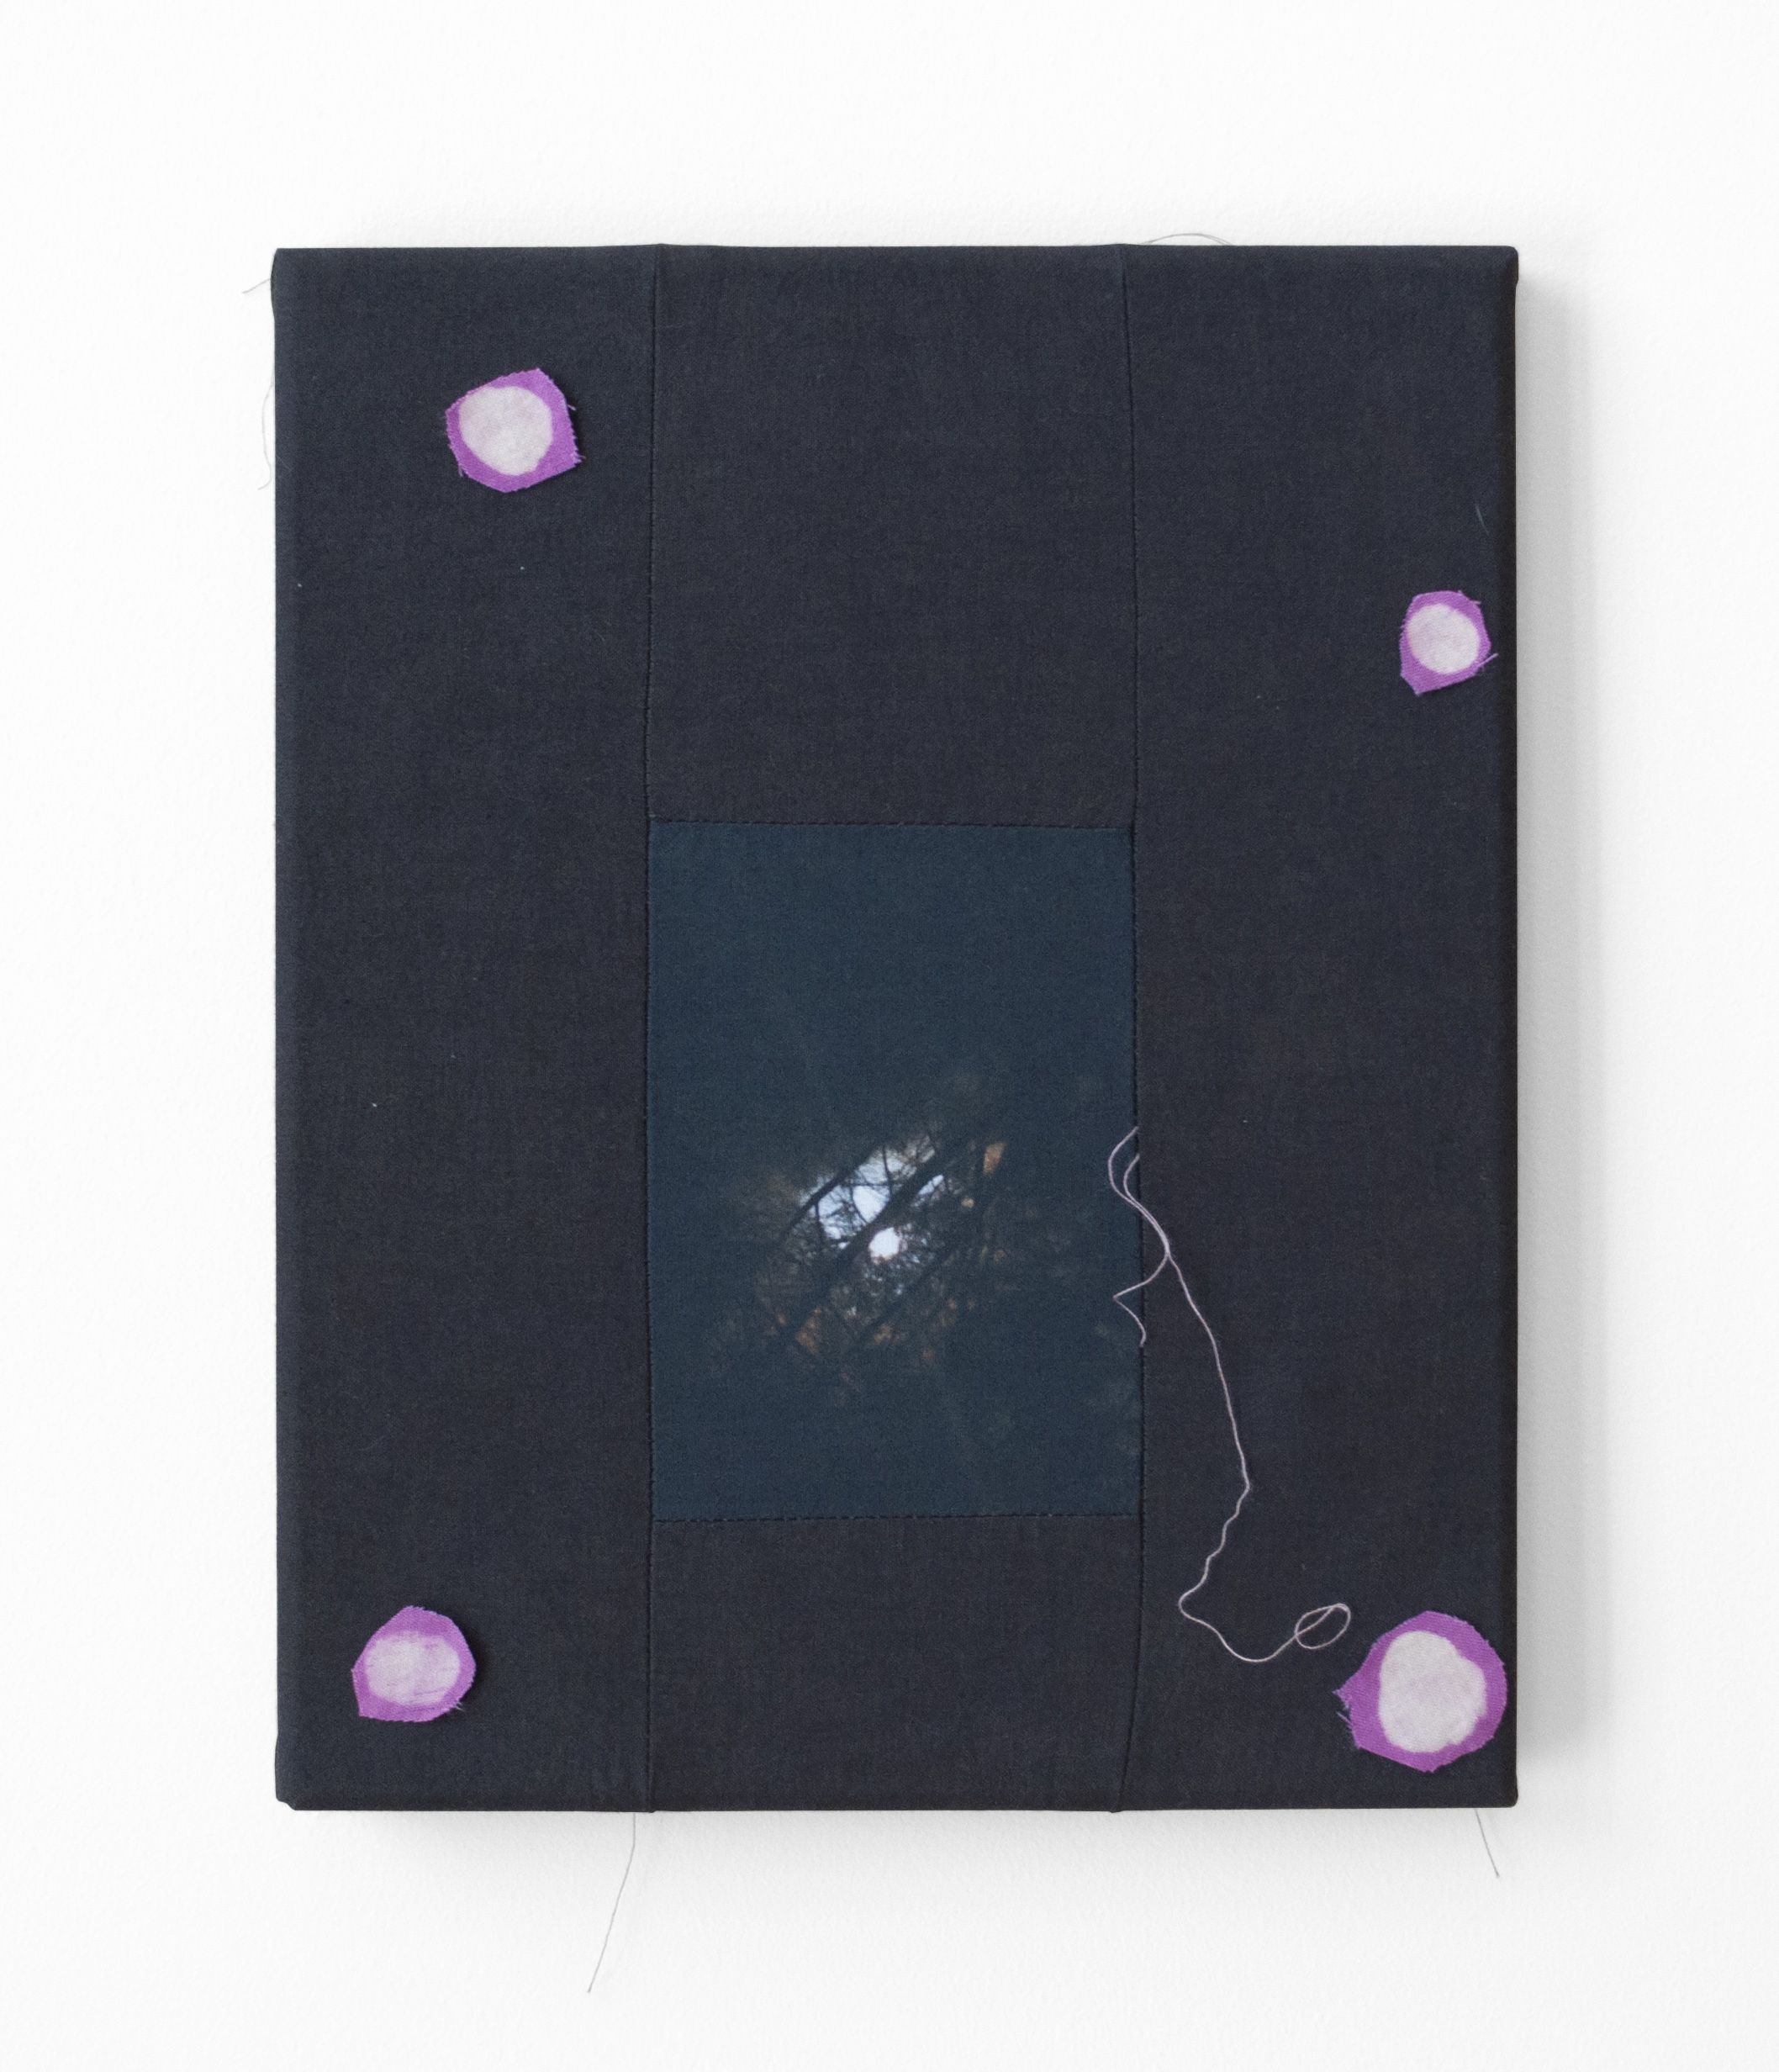 Cody Tumblin, Through the Trees, Dyed Cotton, Bleach, Thread, iPhone Photograph on Cotton, 8 x 10 inches, 2016